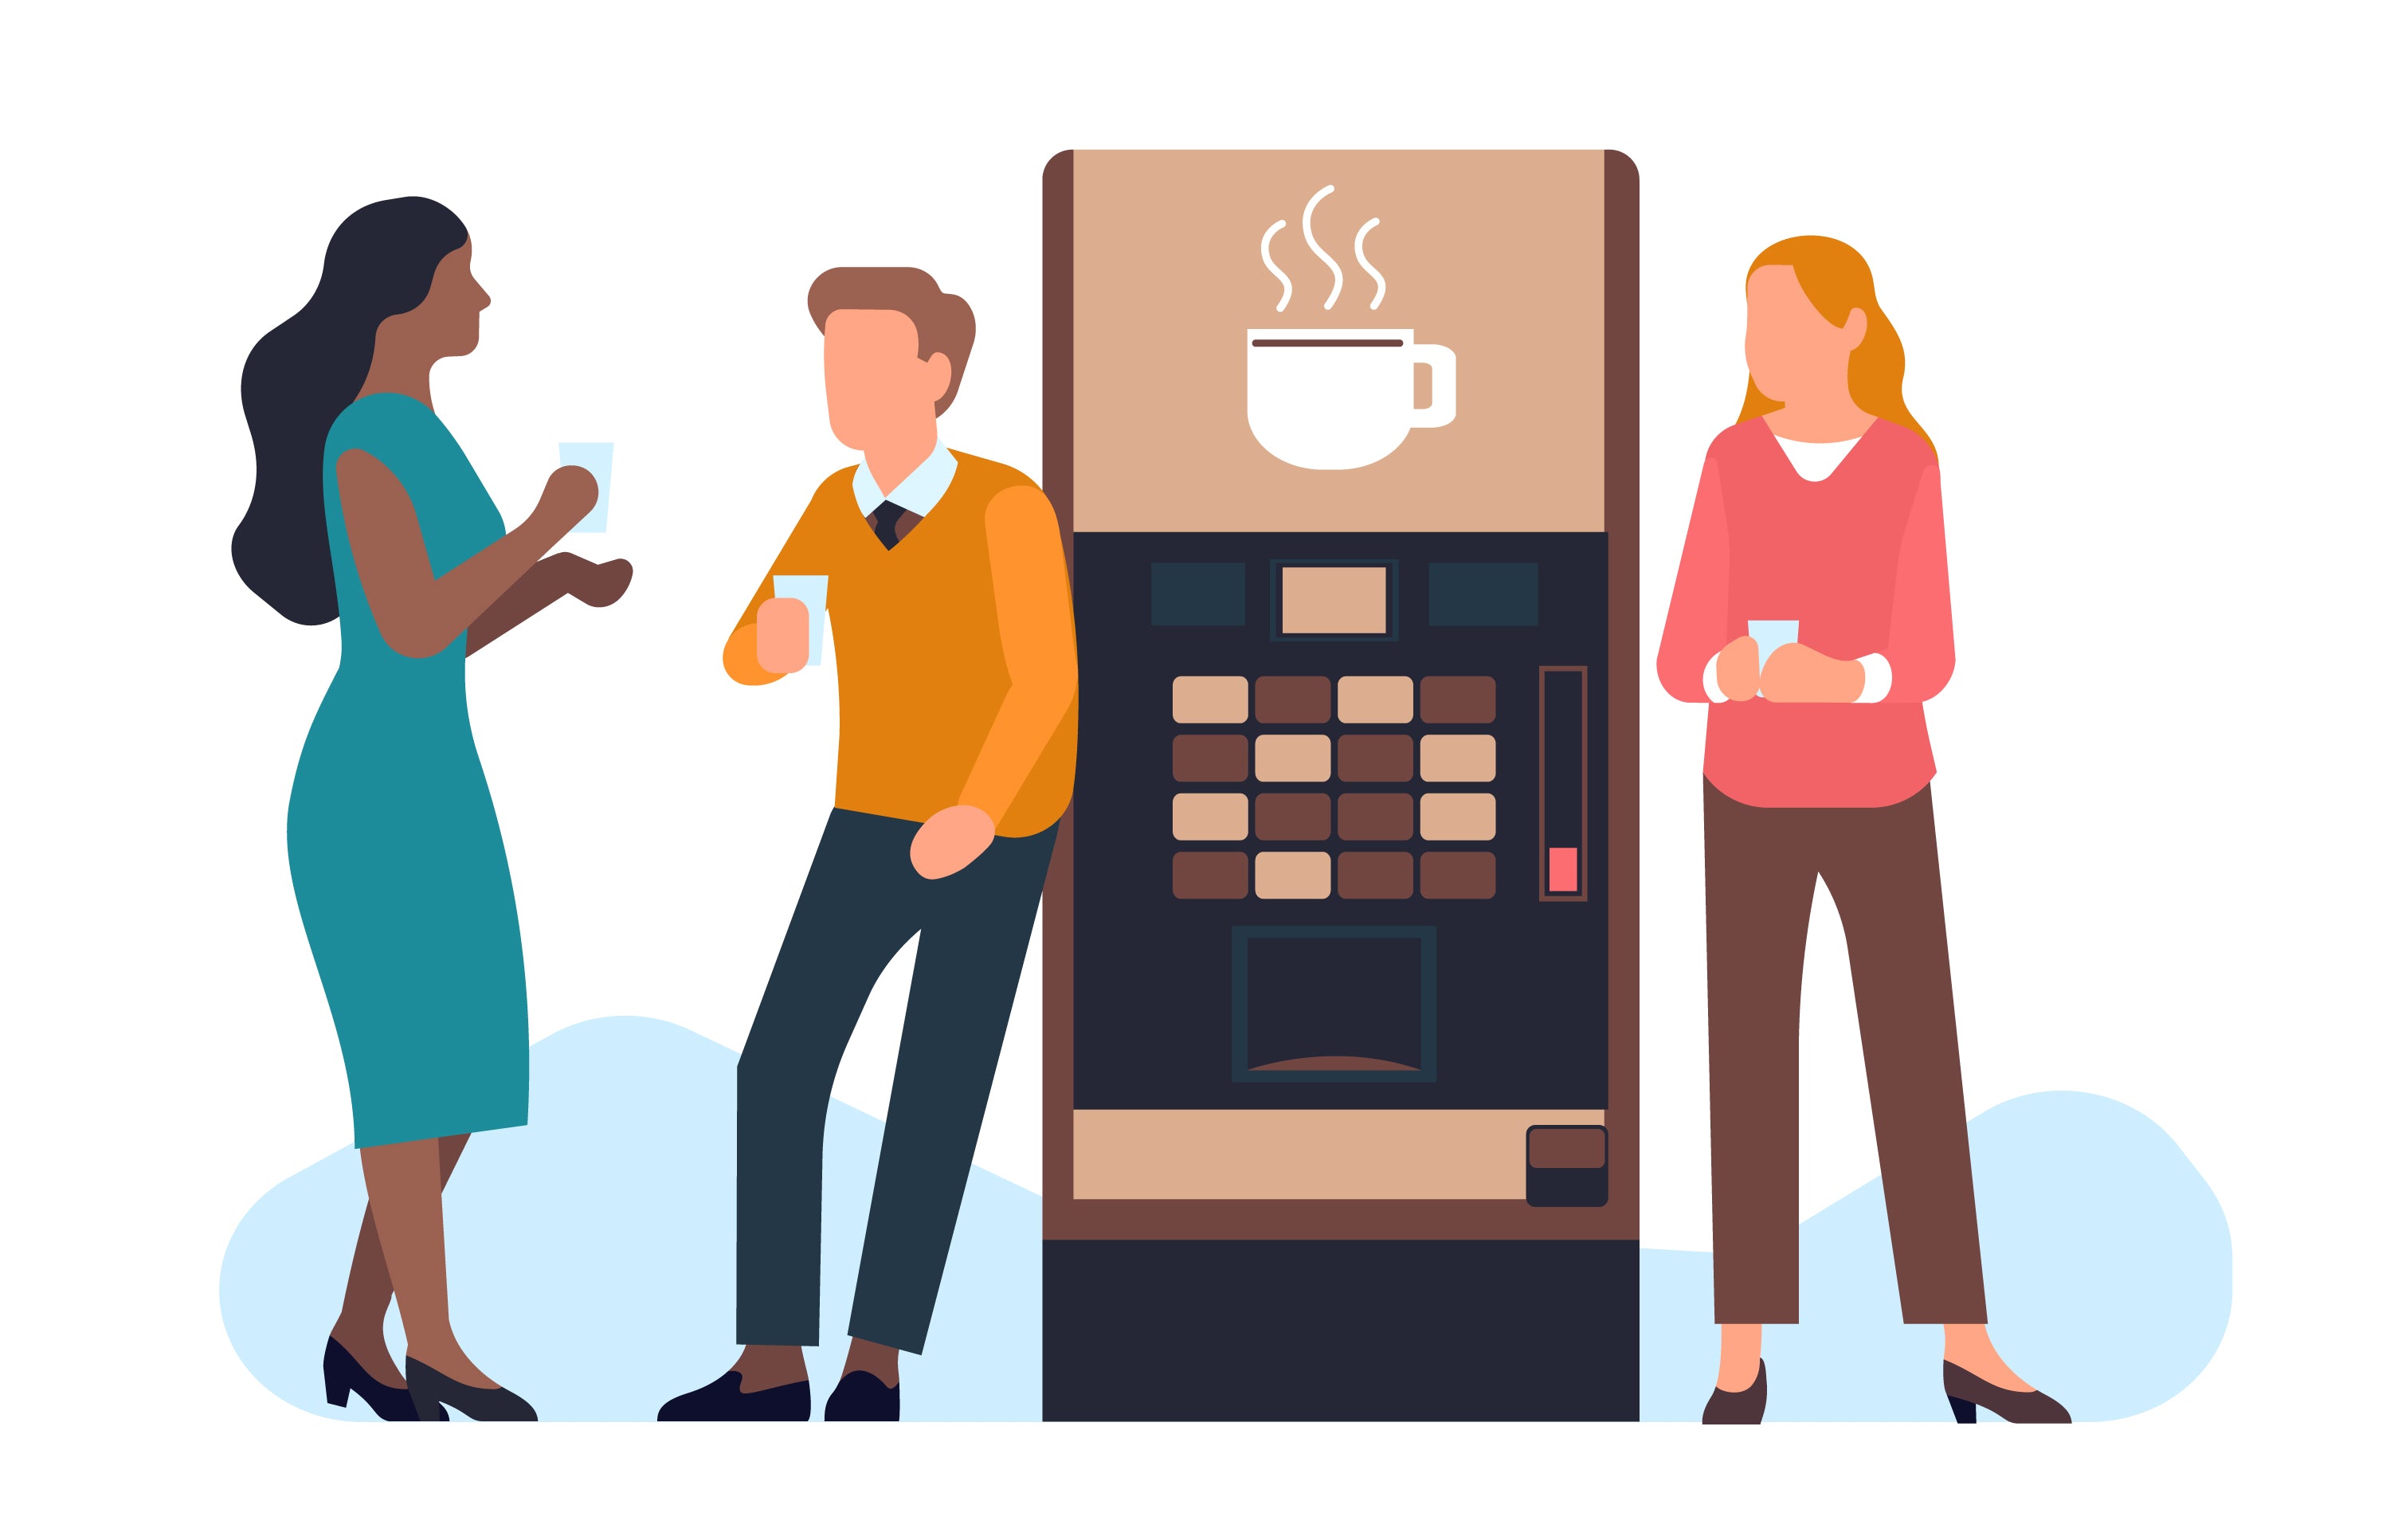 Choosing the Best Office Coffee Machine